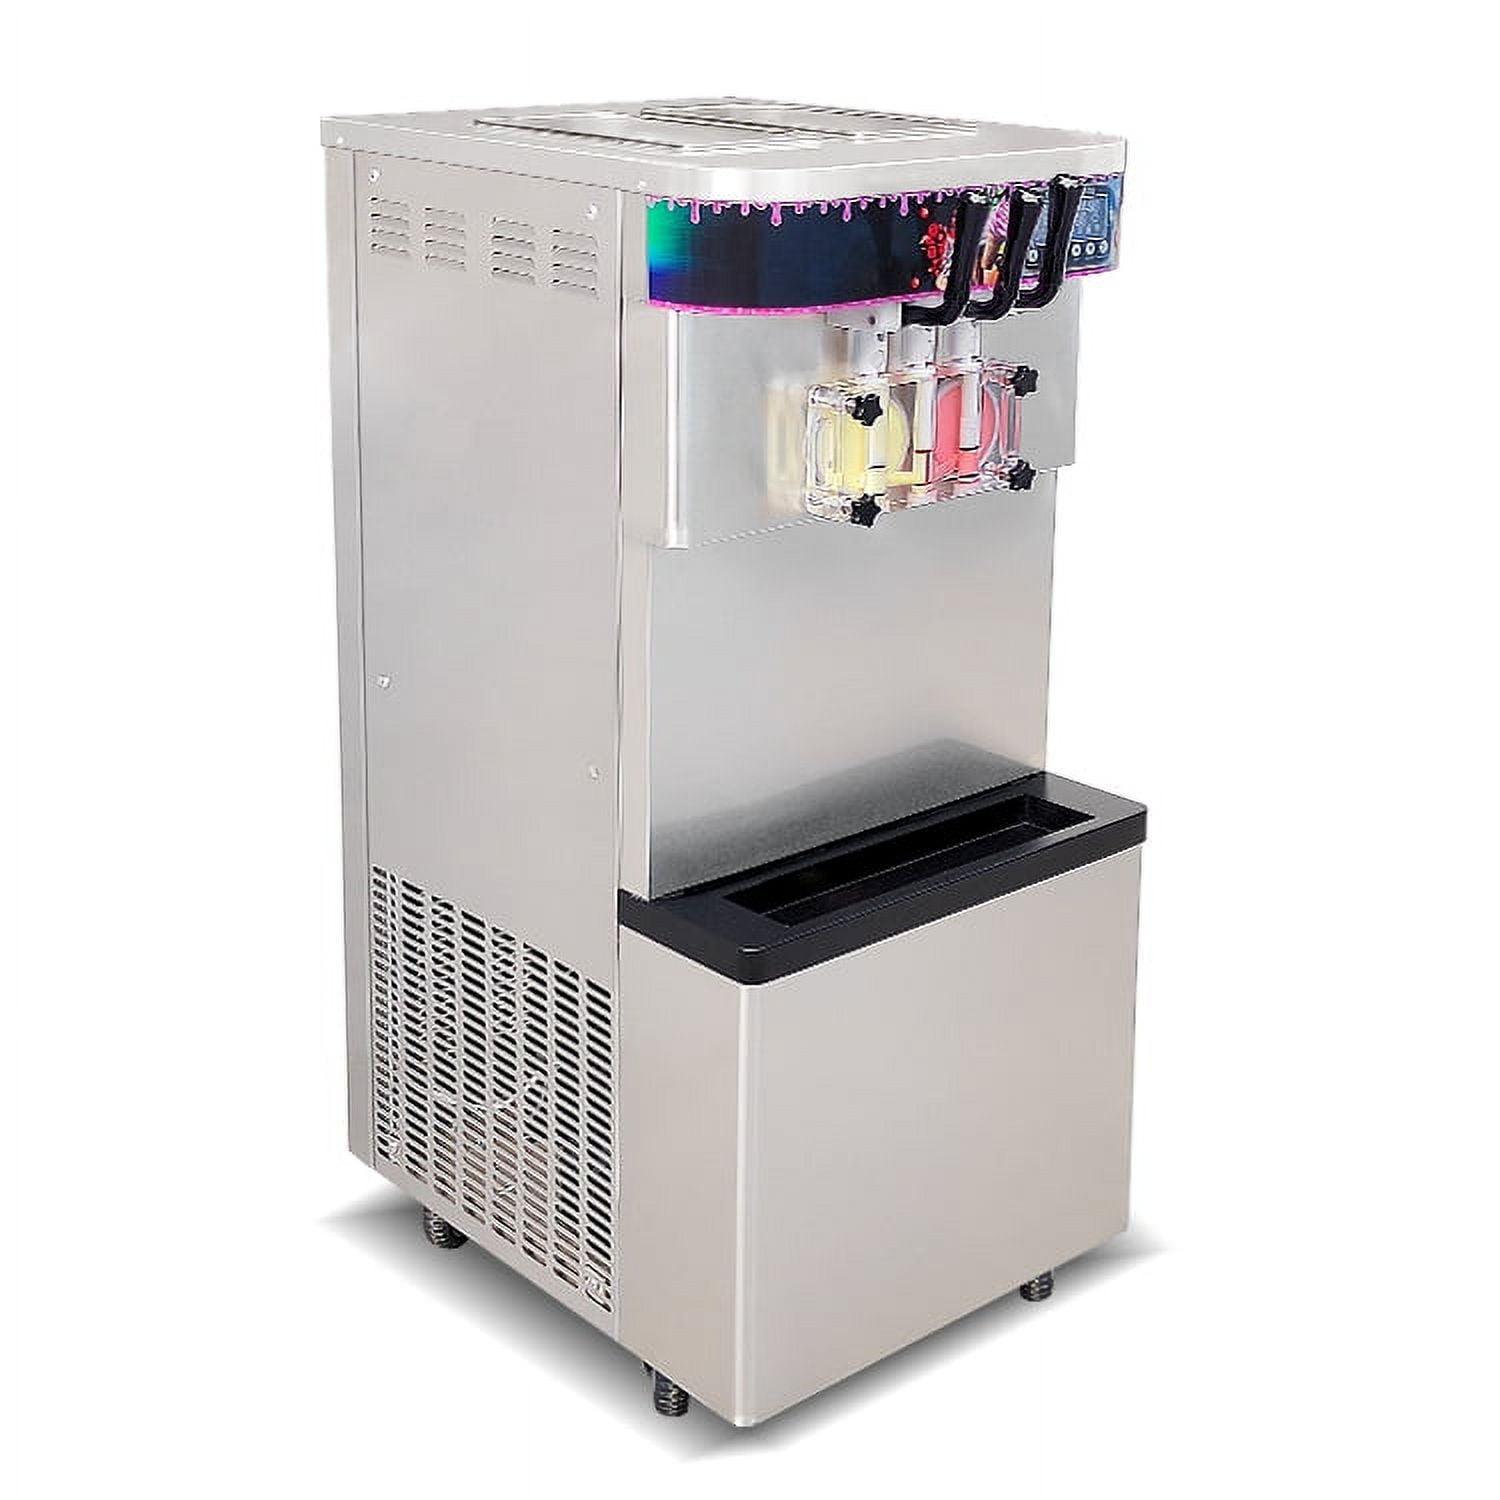 Automated Ice Cream Machines : automatic ice cream maker